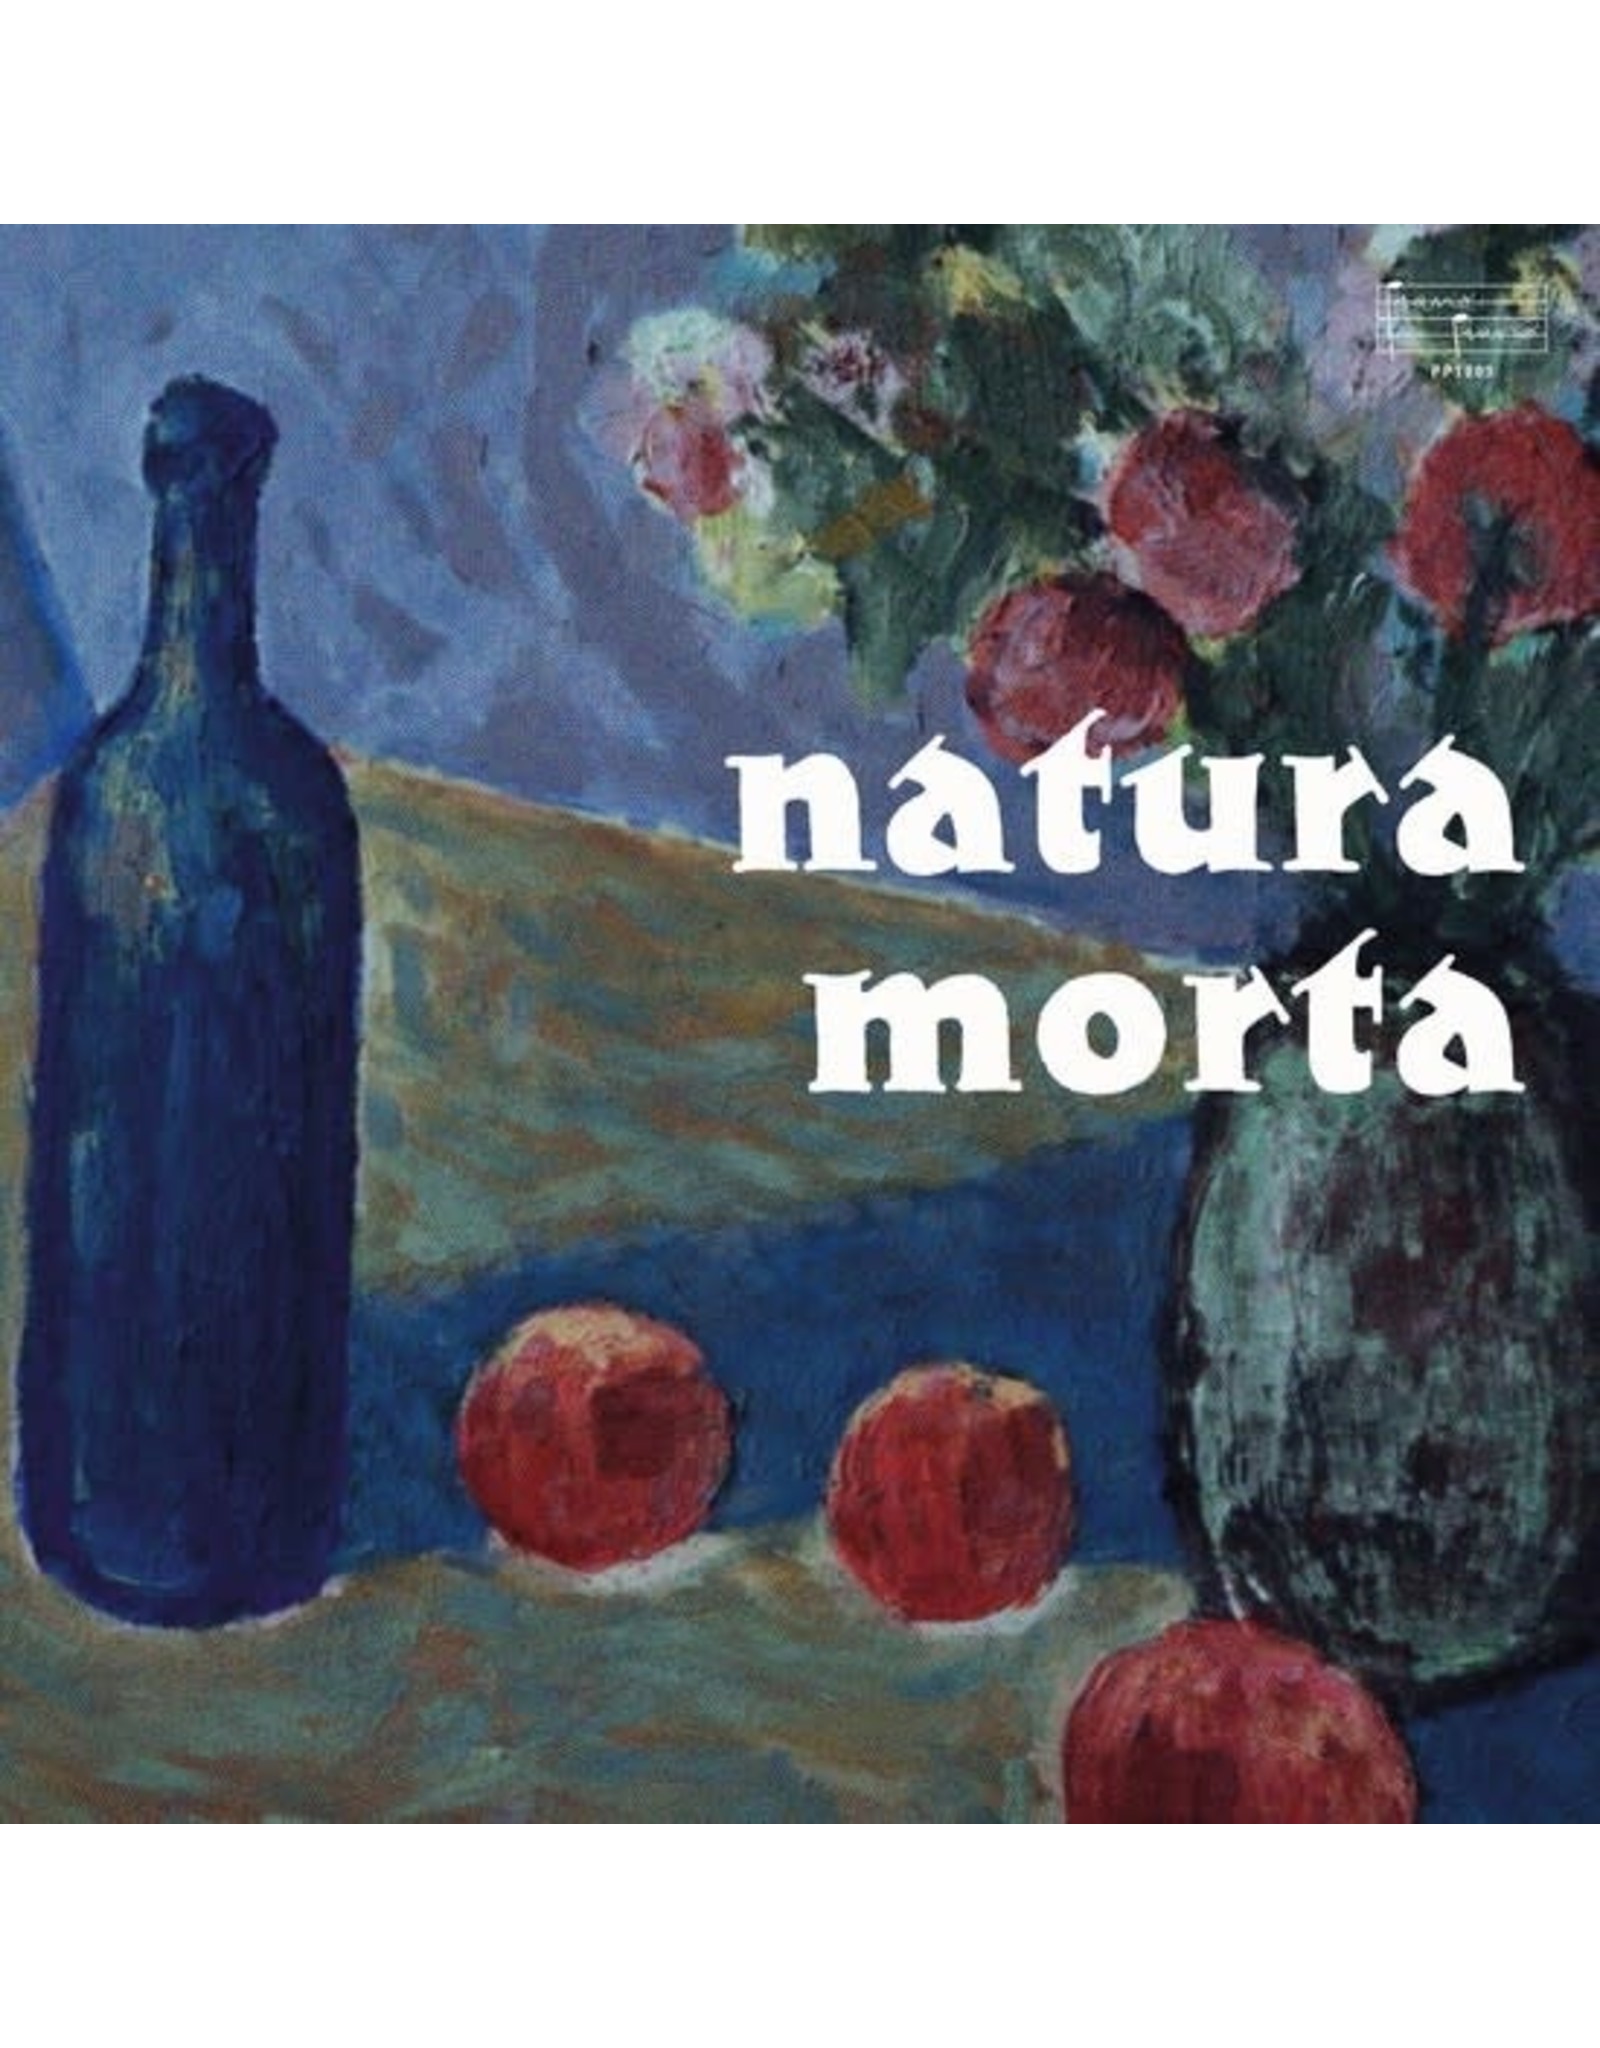 New Vinyl Sven Wunder - Natura Morta LP